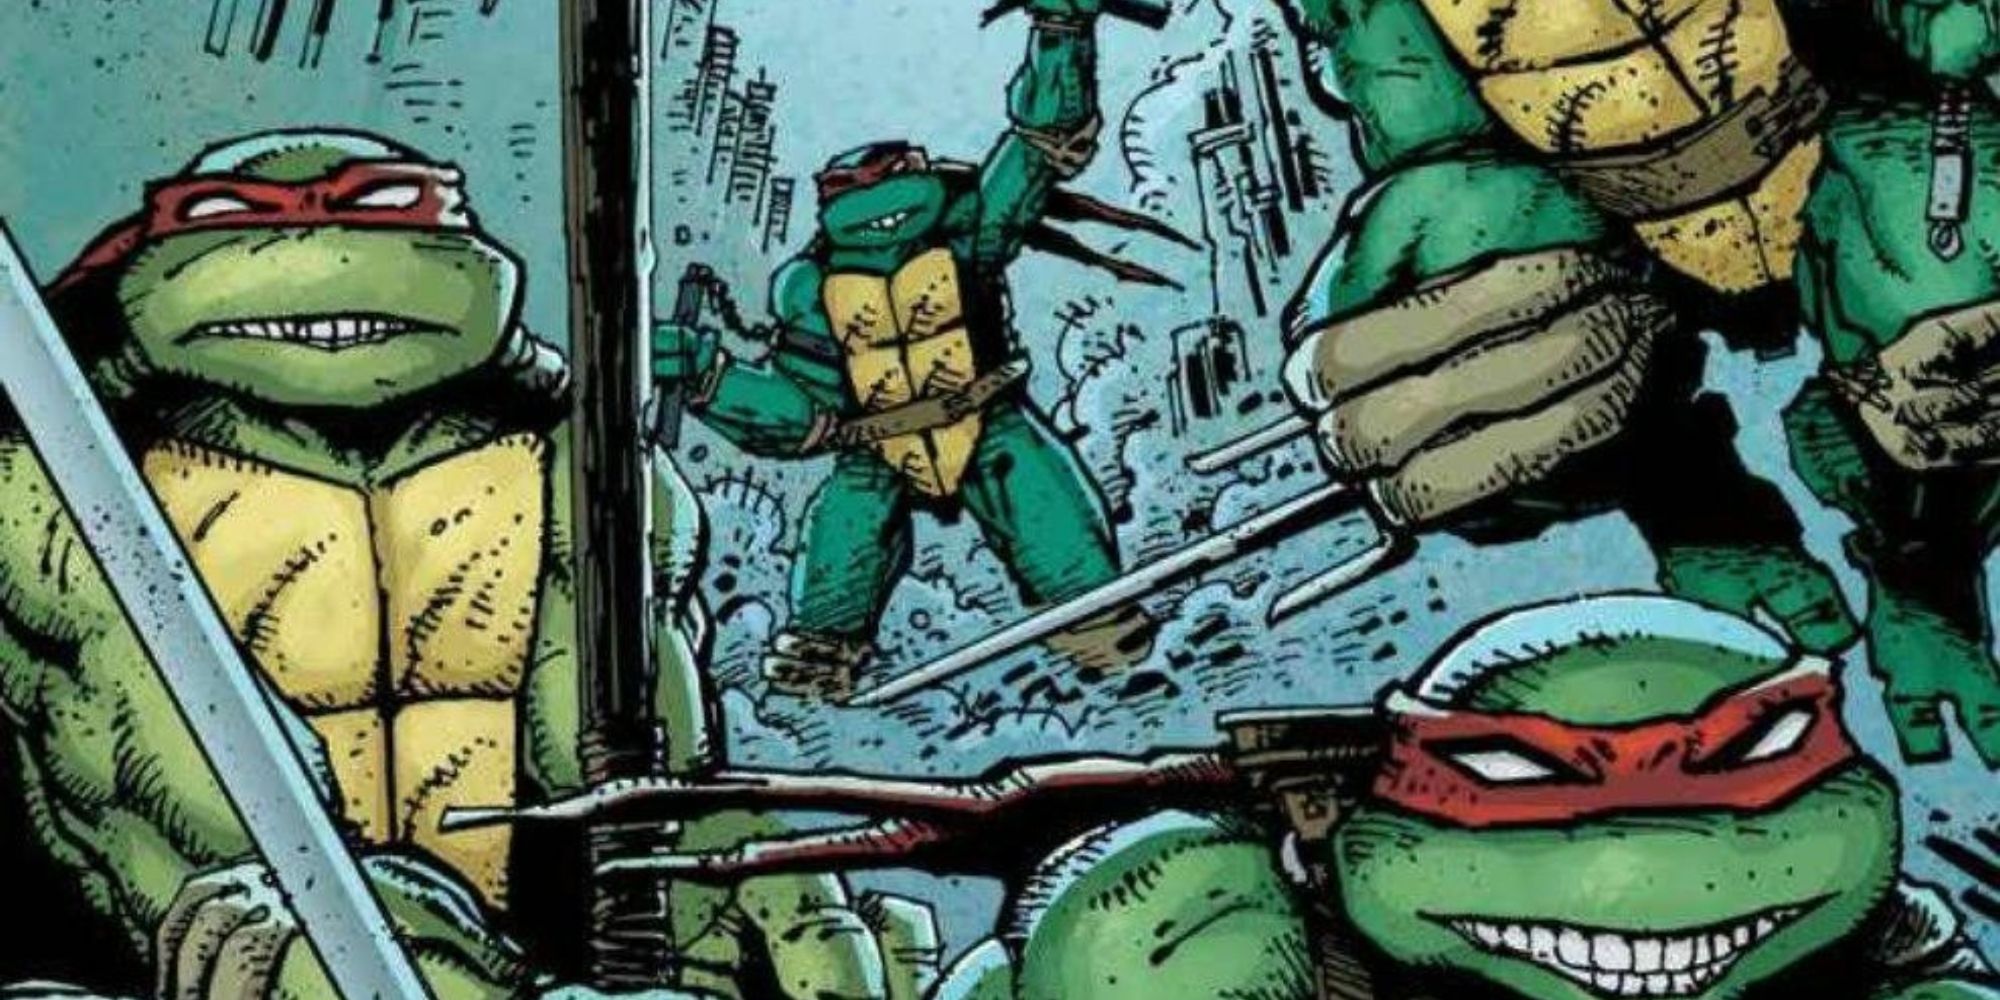 The Teenage Mutant Ninja Turtles attack in IDW comics.